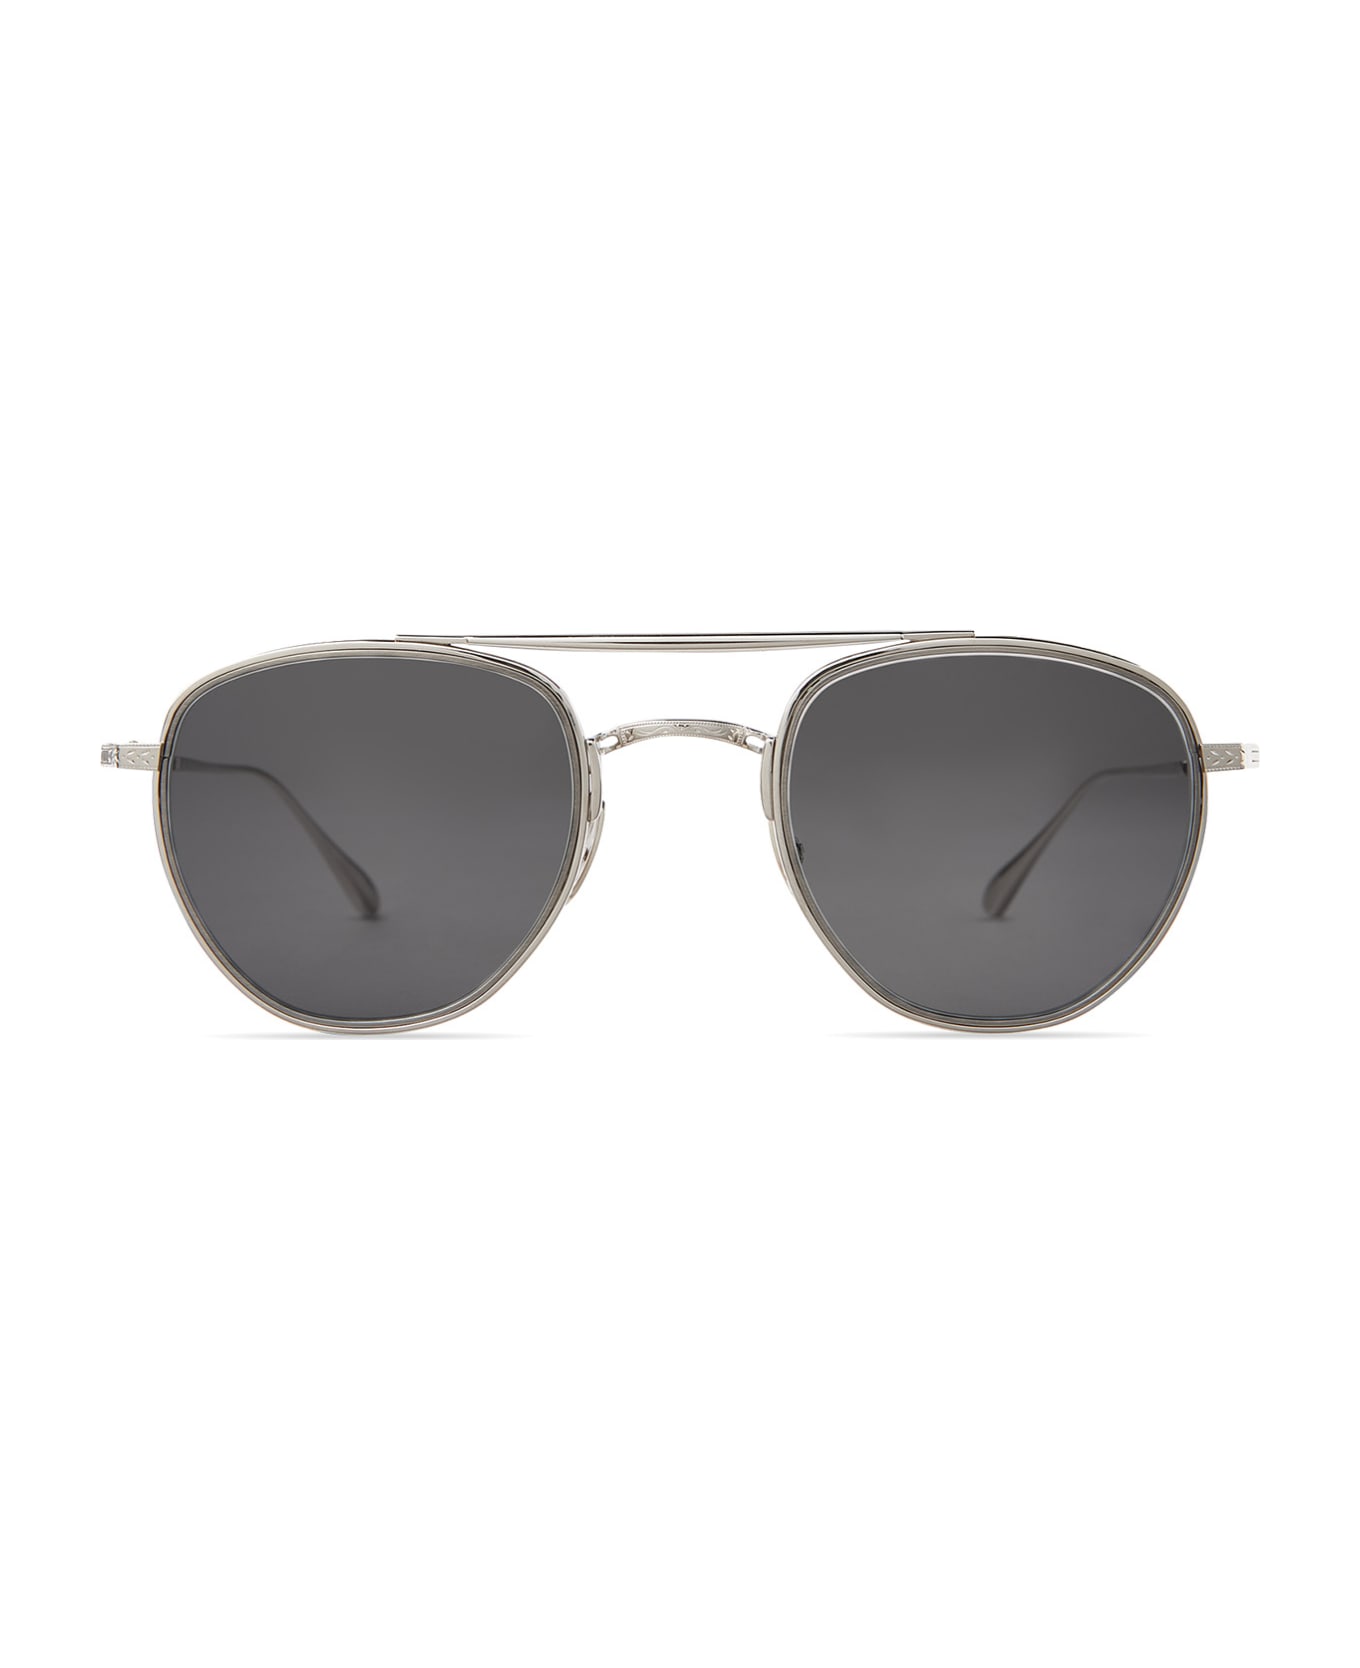 Mr. Leight Roku Ii S Platinum-pewter Sunglasses - Platinum-Pewter